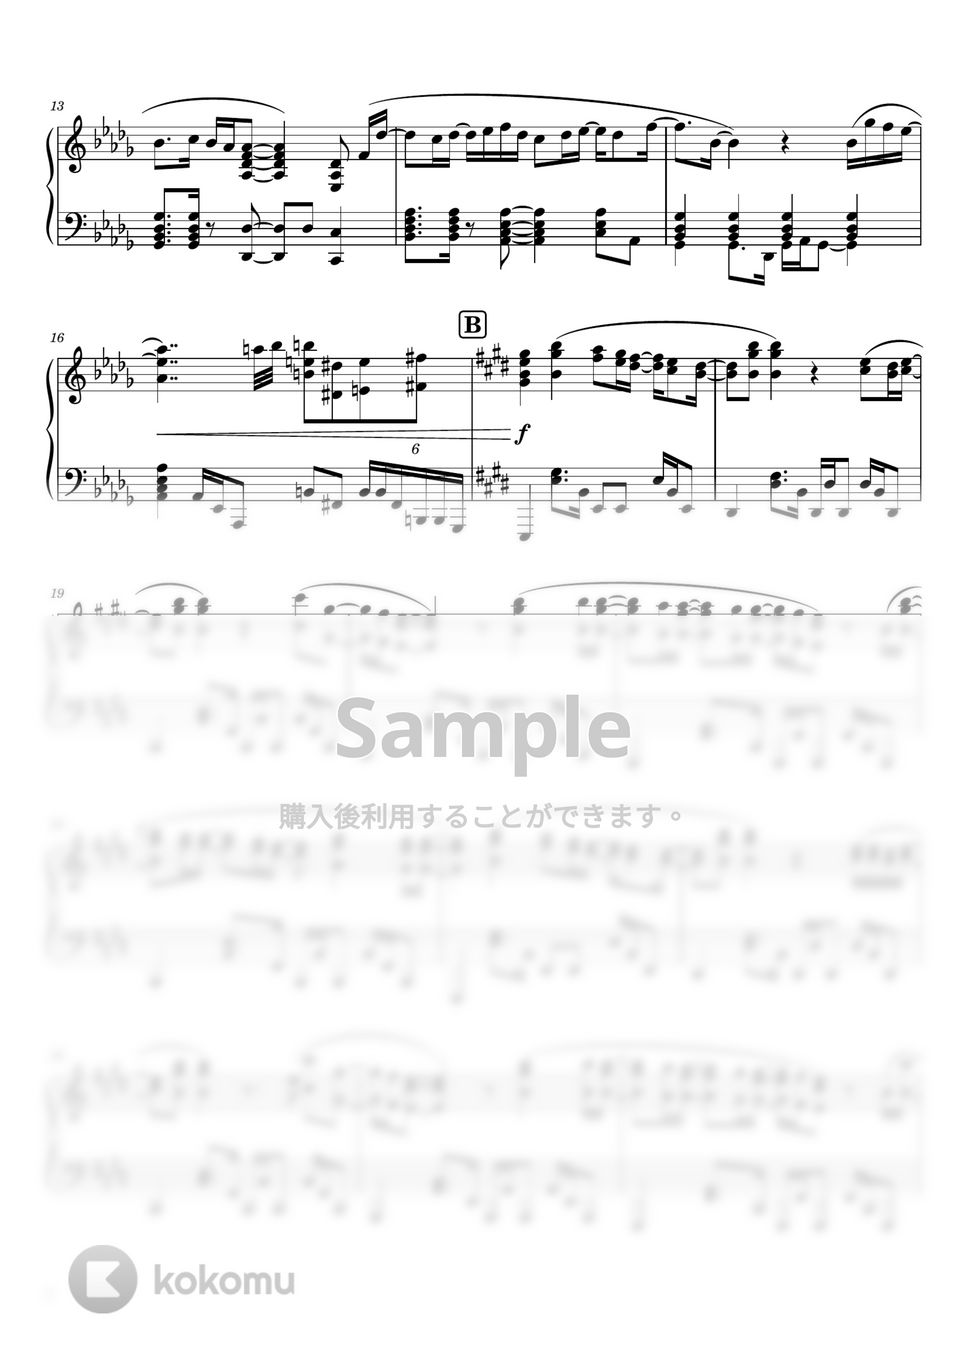 Ado - 風のゆくえ (ピアノソロ / 中級～上級) by SuperMomoFactory